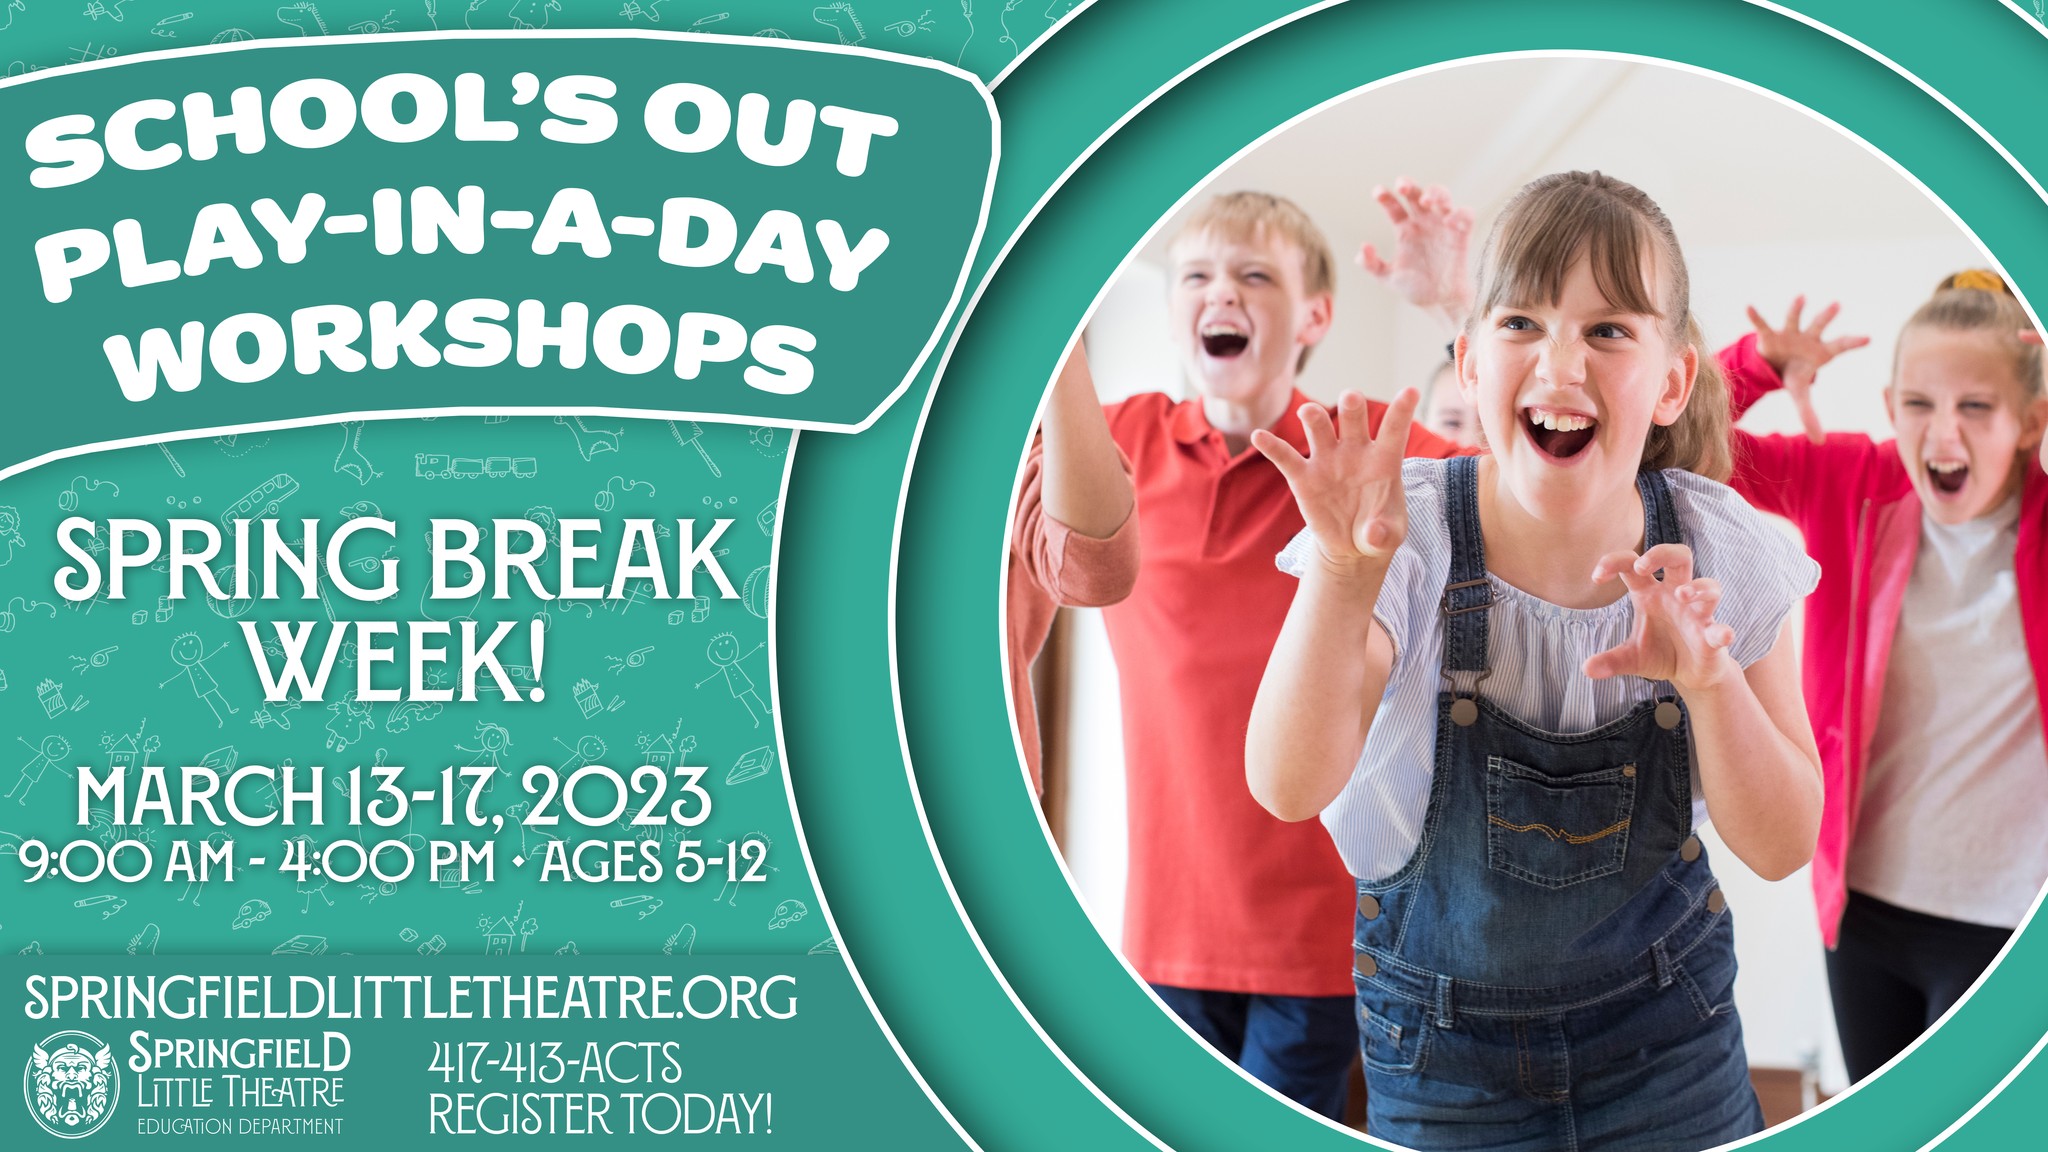 SPRING BREAK - School's Out Workshops